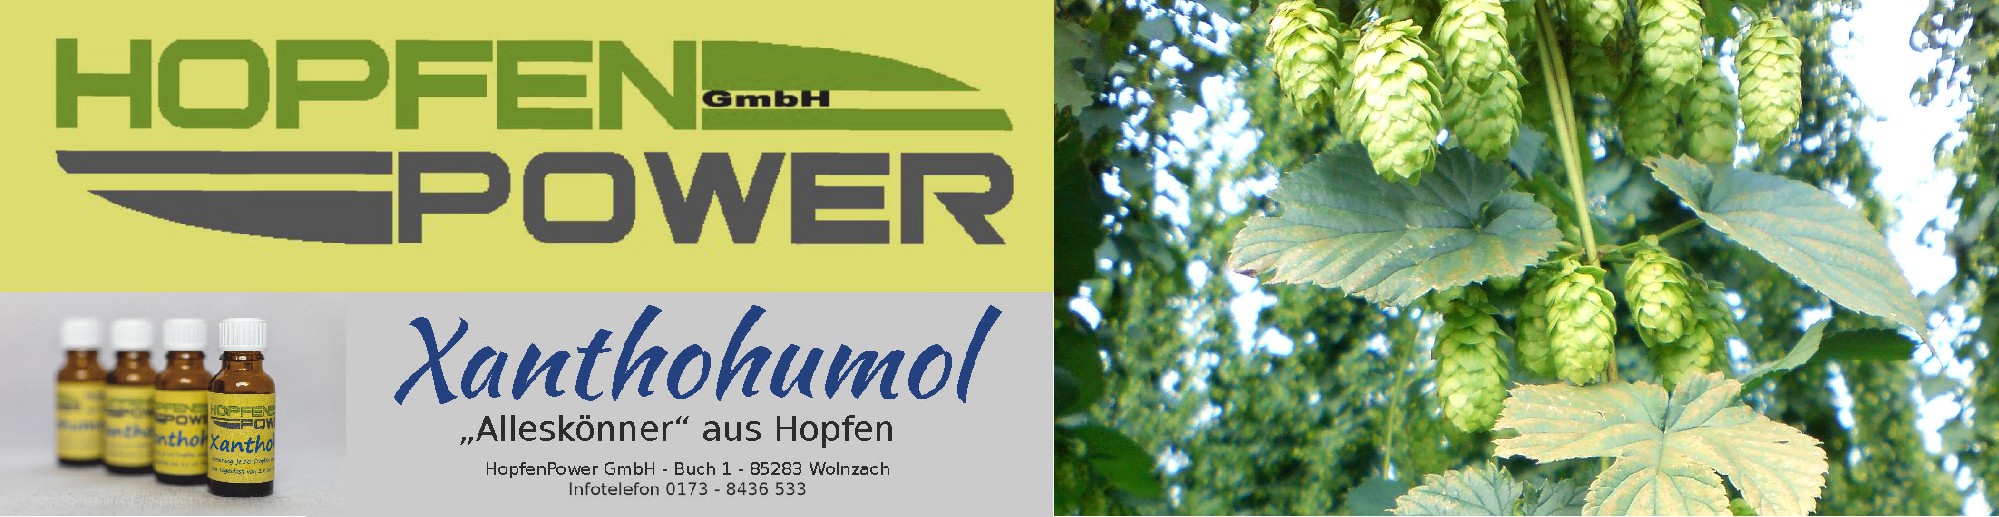 HopfenPower GmbH Xanthohumol Banner